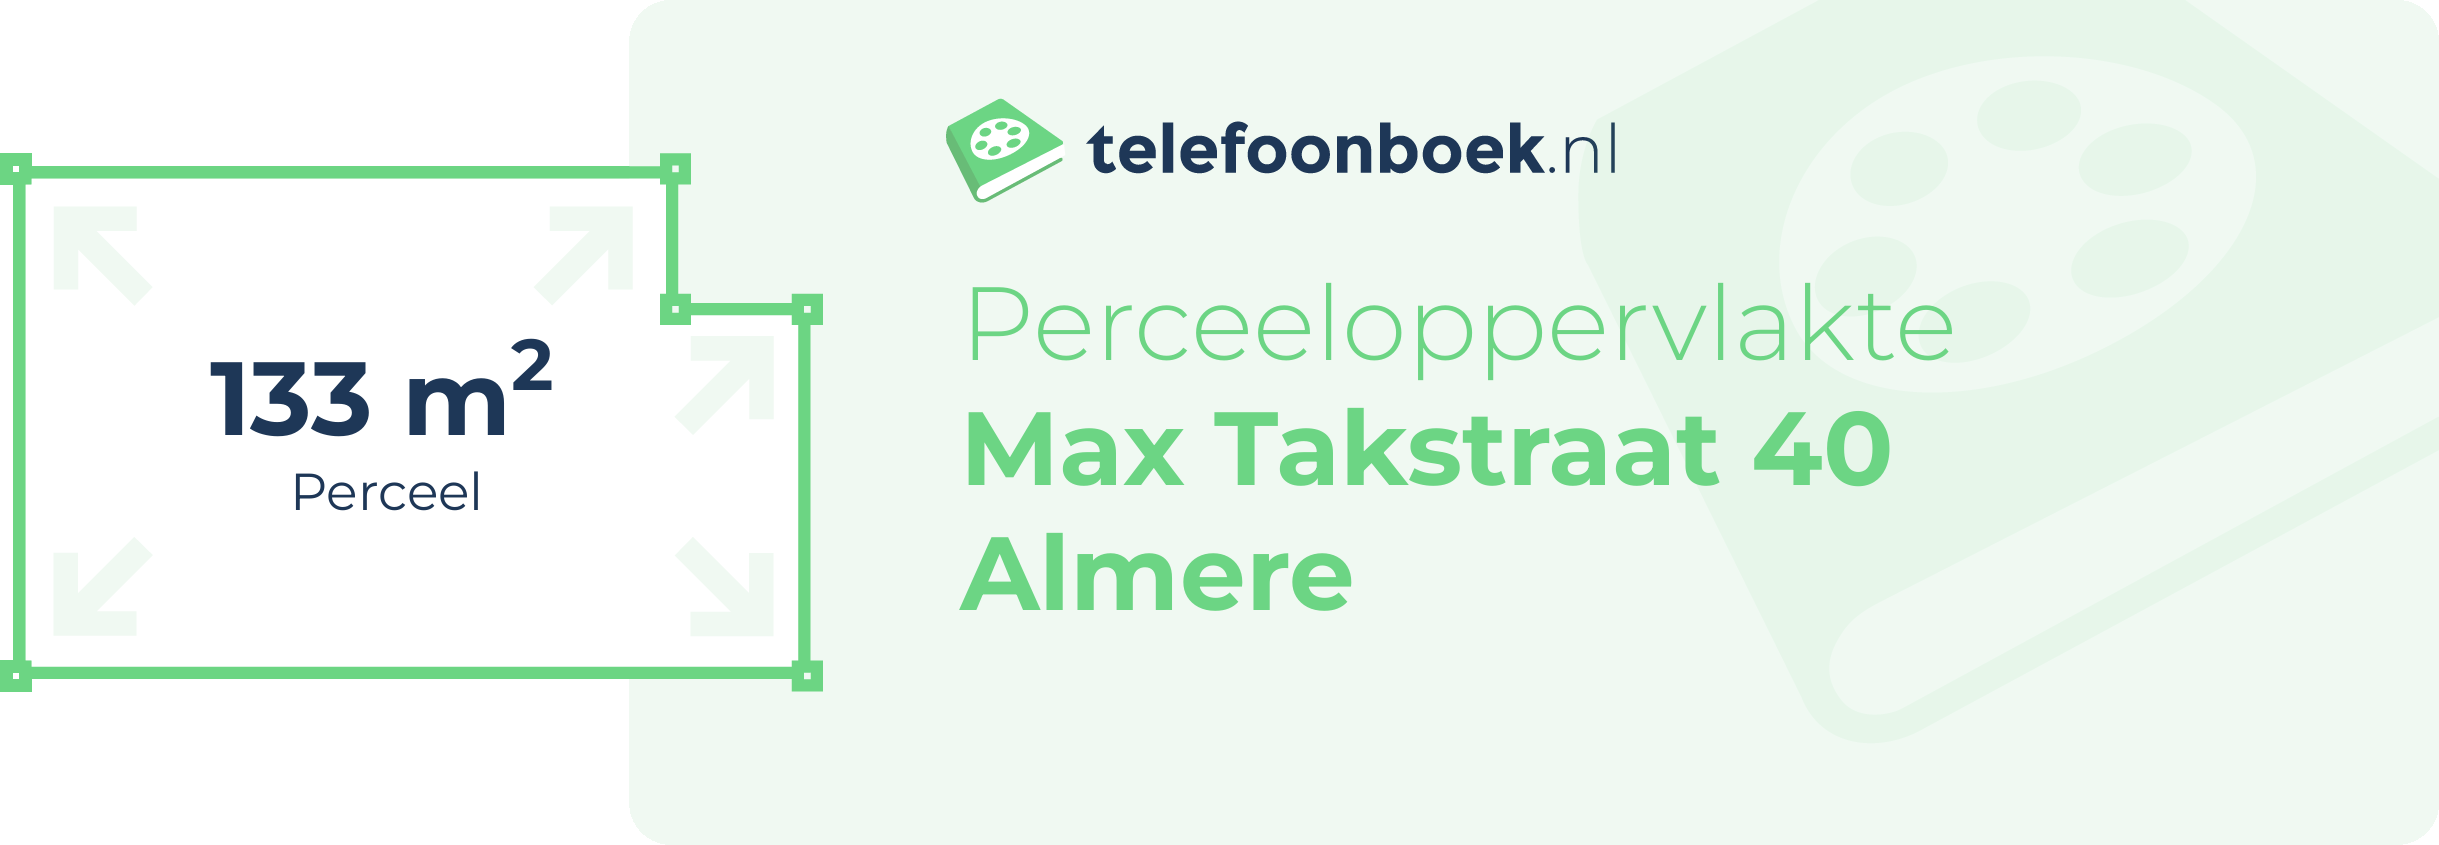 Perceeloppervlakte Max Takstraat 40 Almere